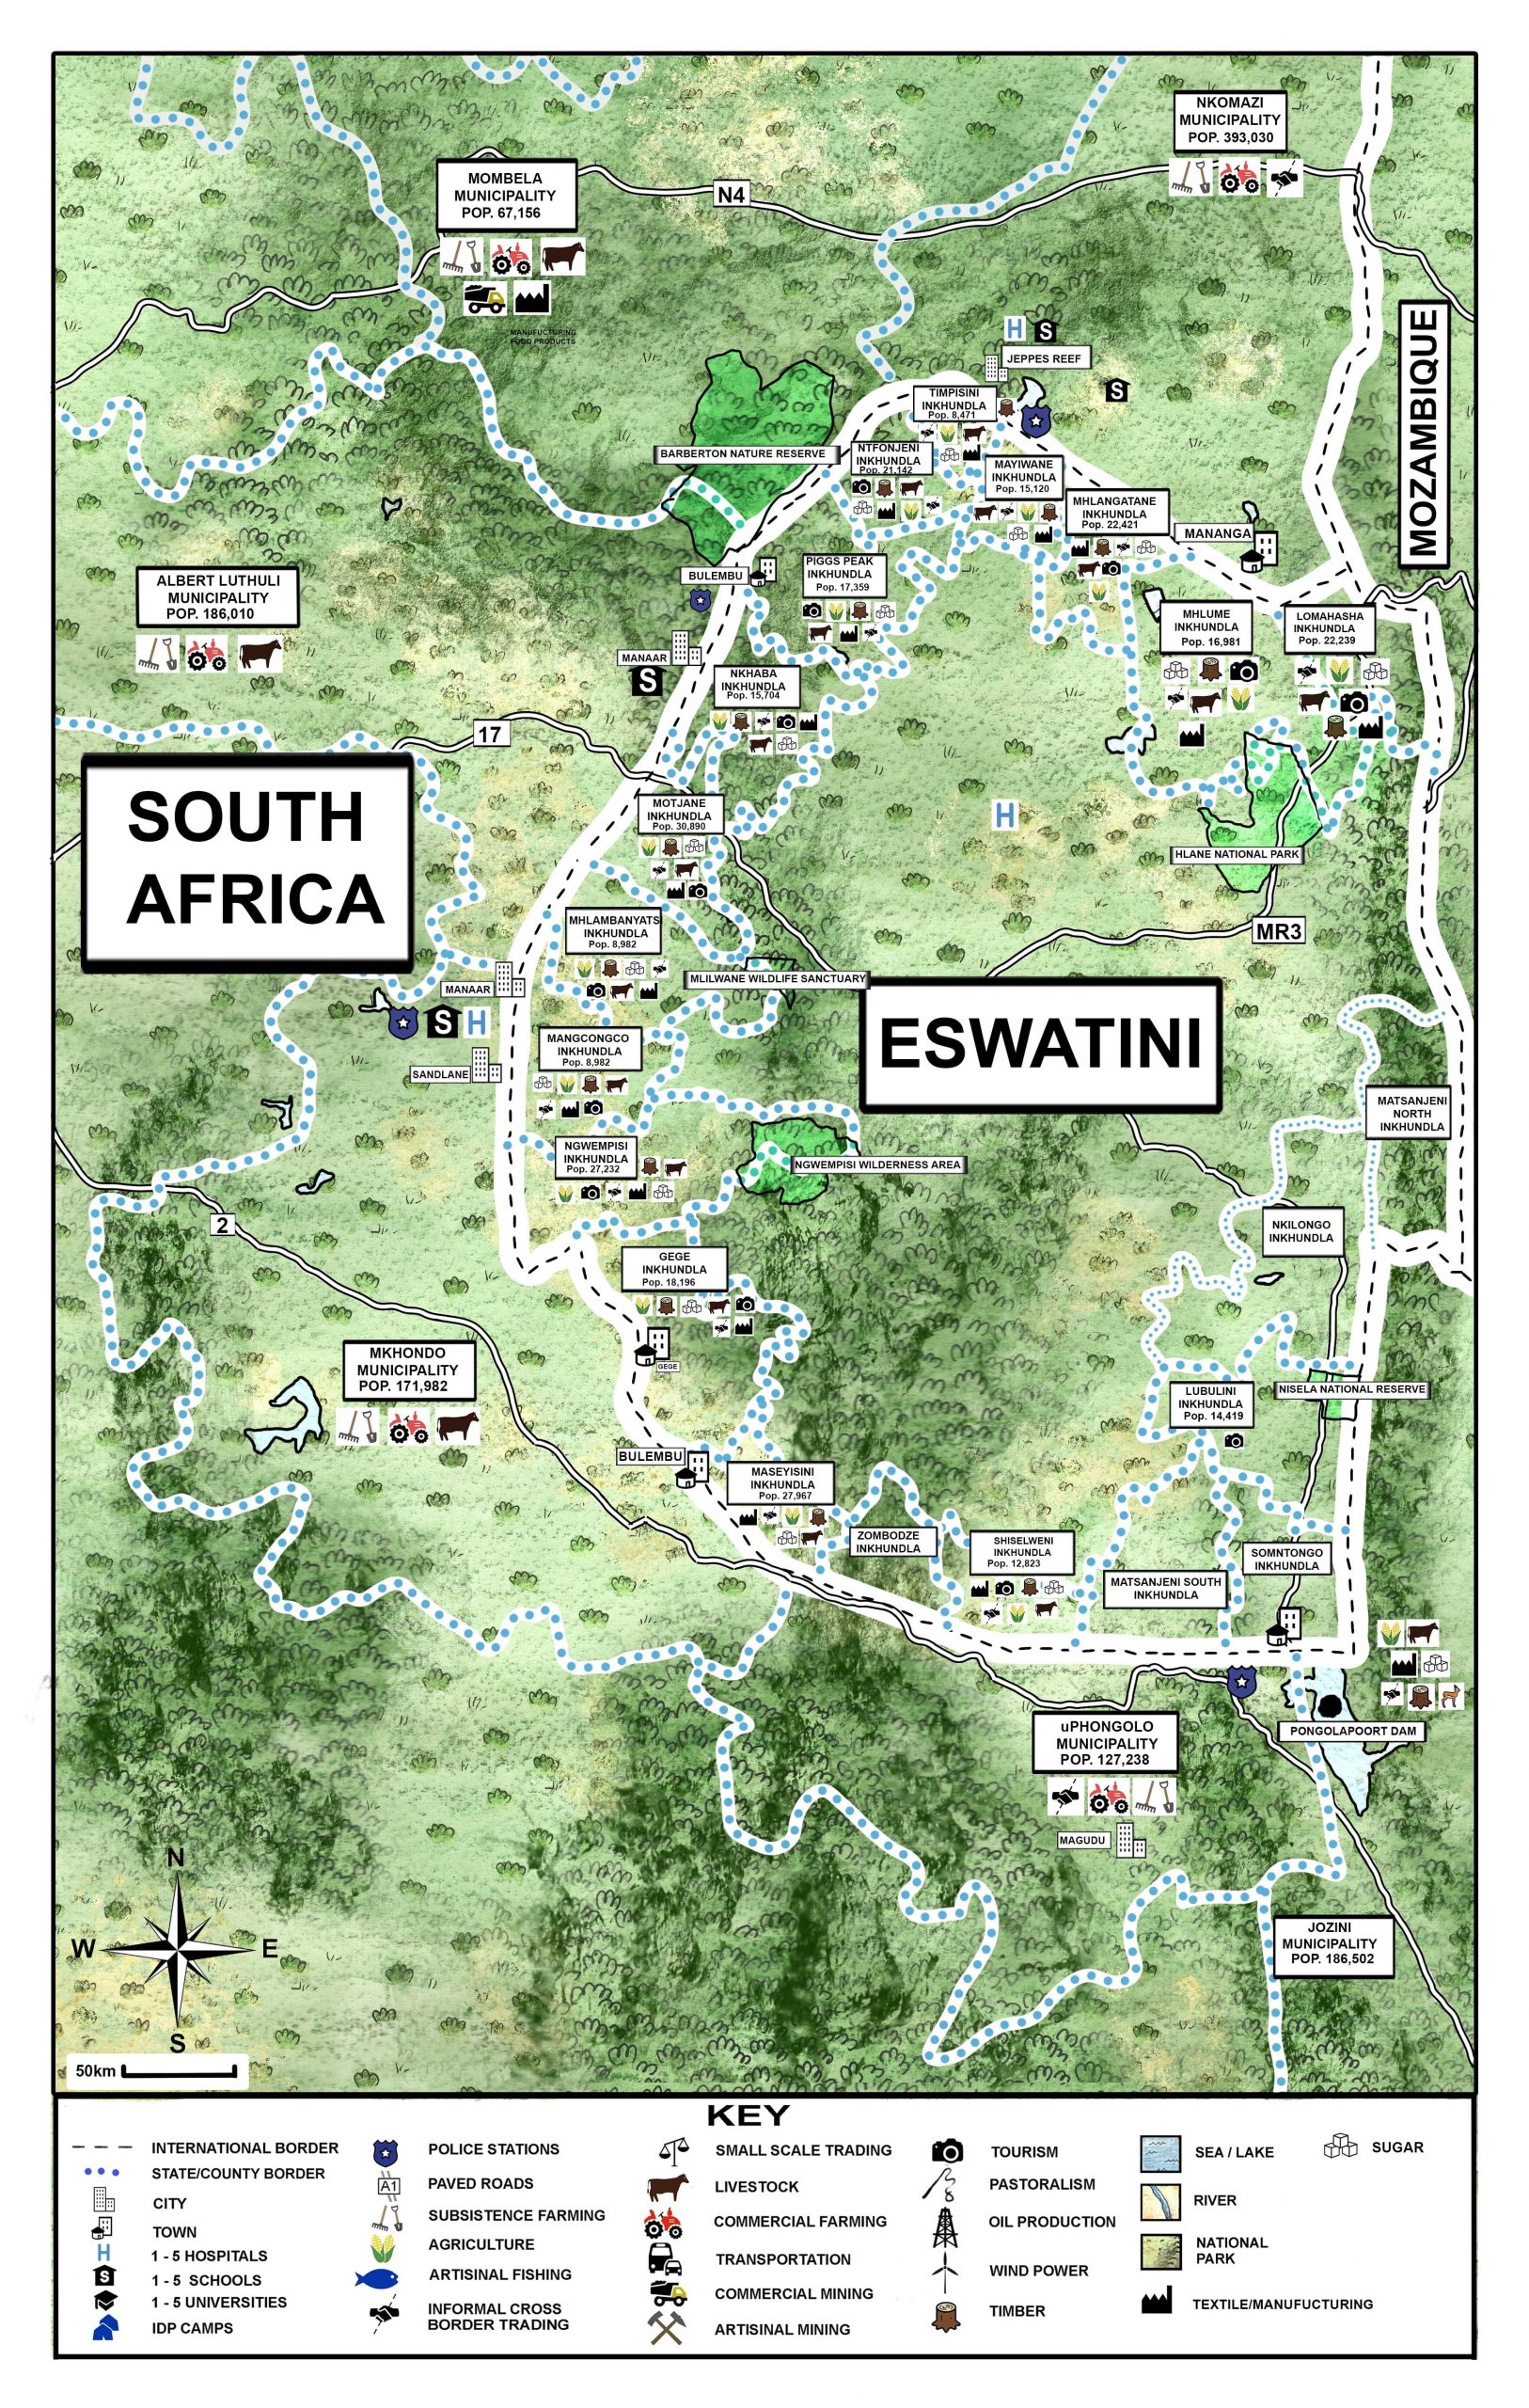 ESWATINI - SOUTH AFRICA_illustration